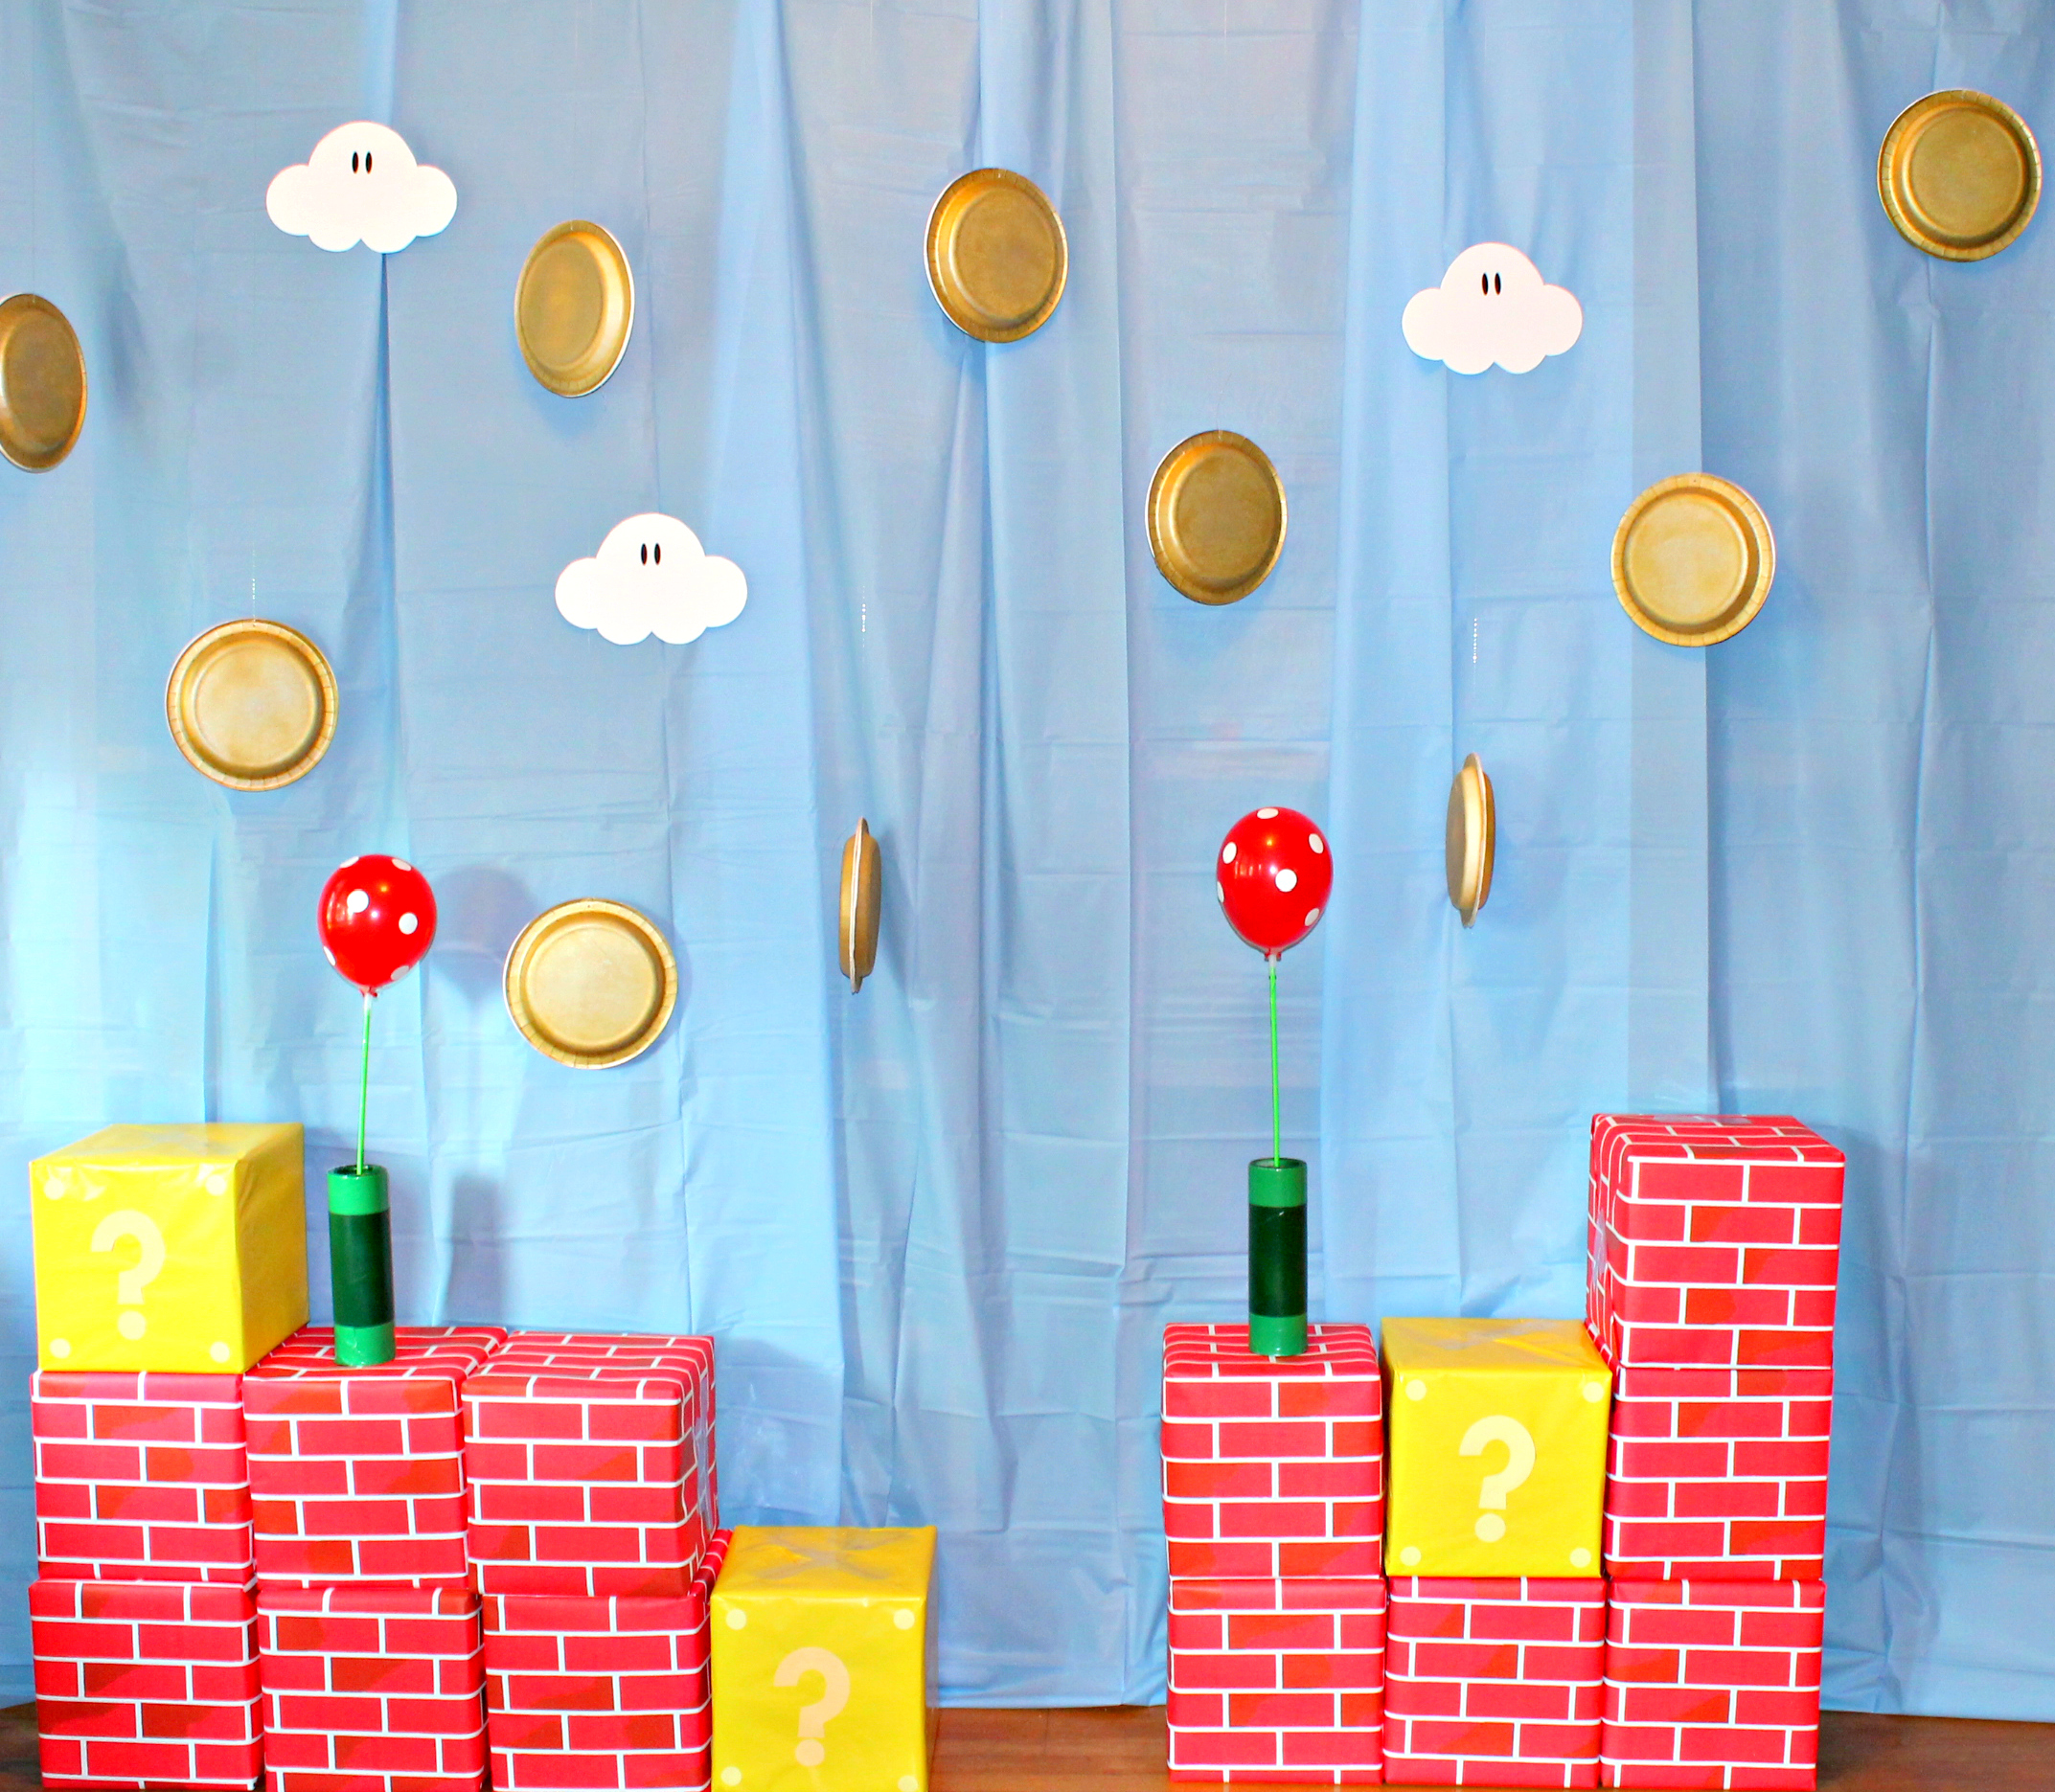 Super Mario Themed Square Balloon Kids Birthday Party Celebration Decoration  New